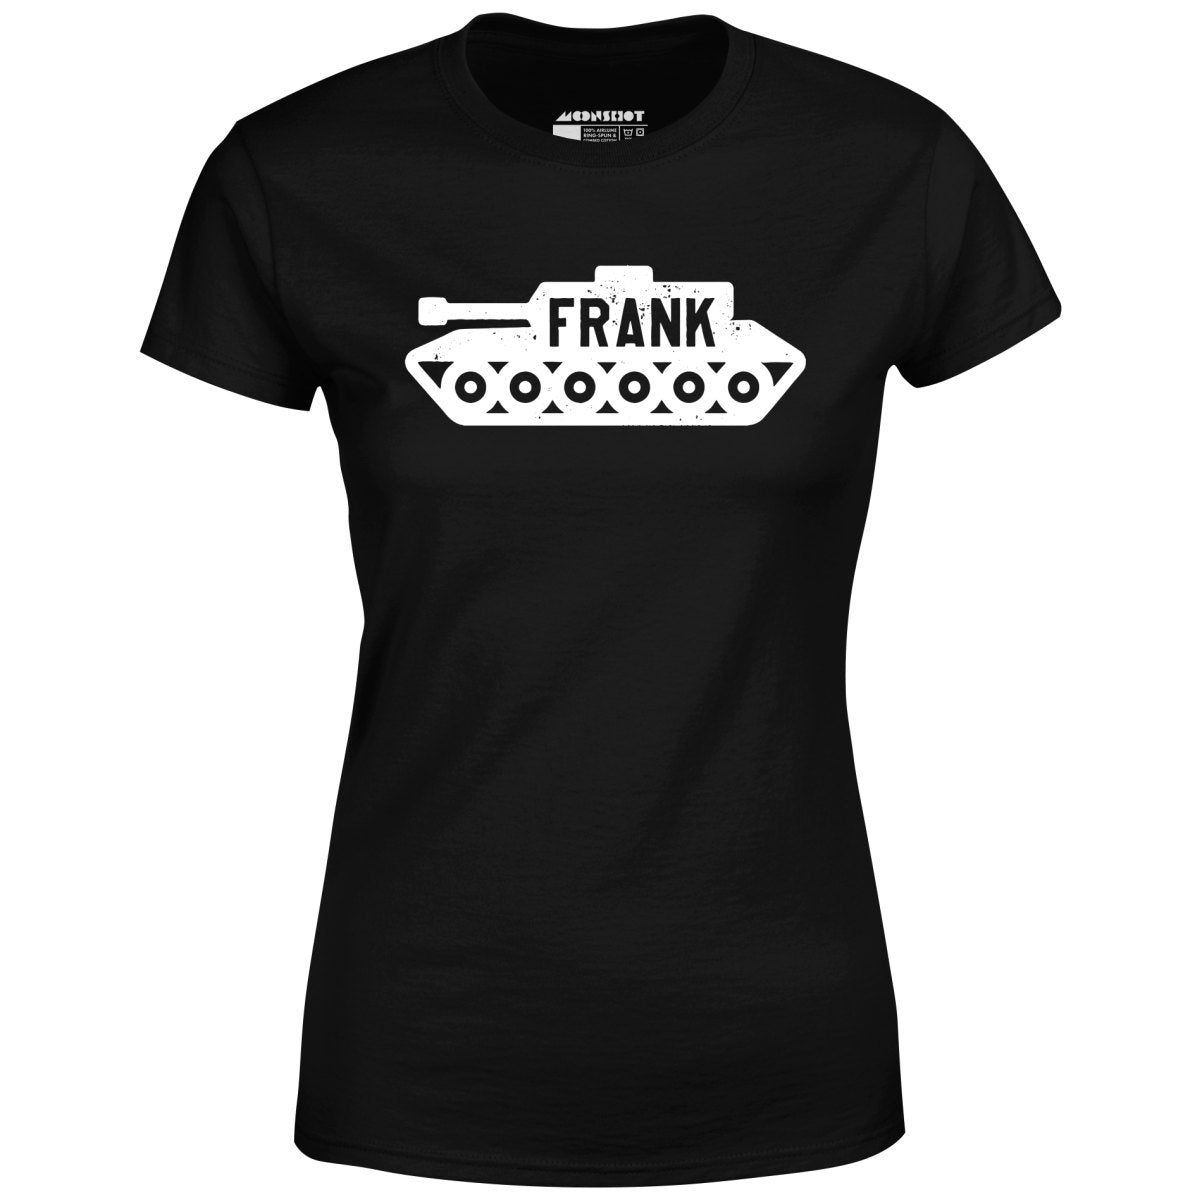 Frank the Tank - Women's T-Shirt